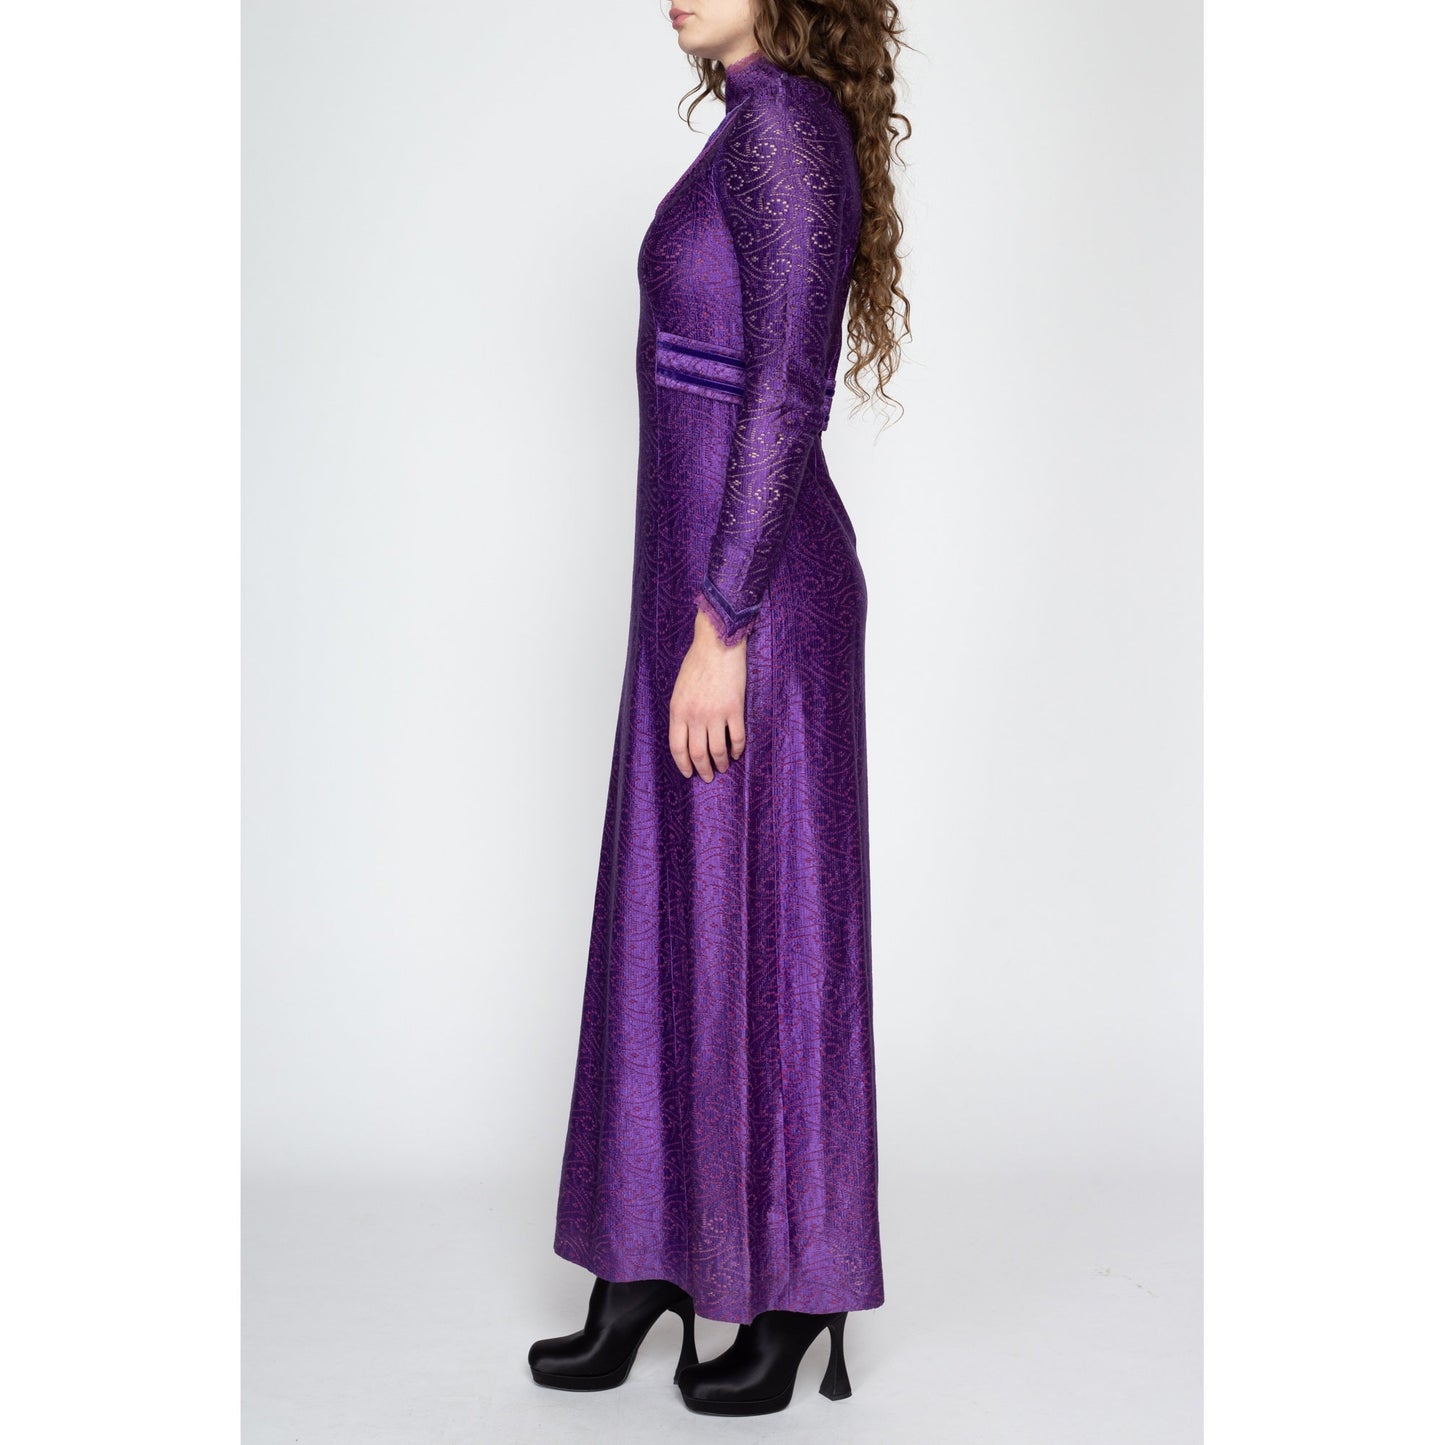 Small 70s Young Innocent Arpeja Boho Purple Eyelet Maxi Dress | Vintage Bohemian Renaissance Long Sleeve High Neck Satin Victorian Gown